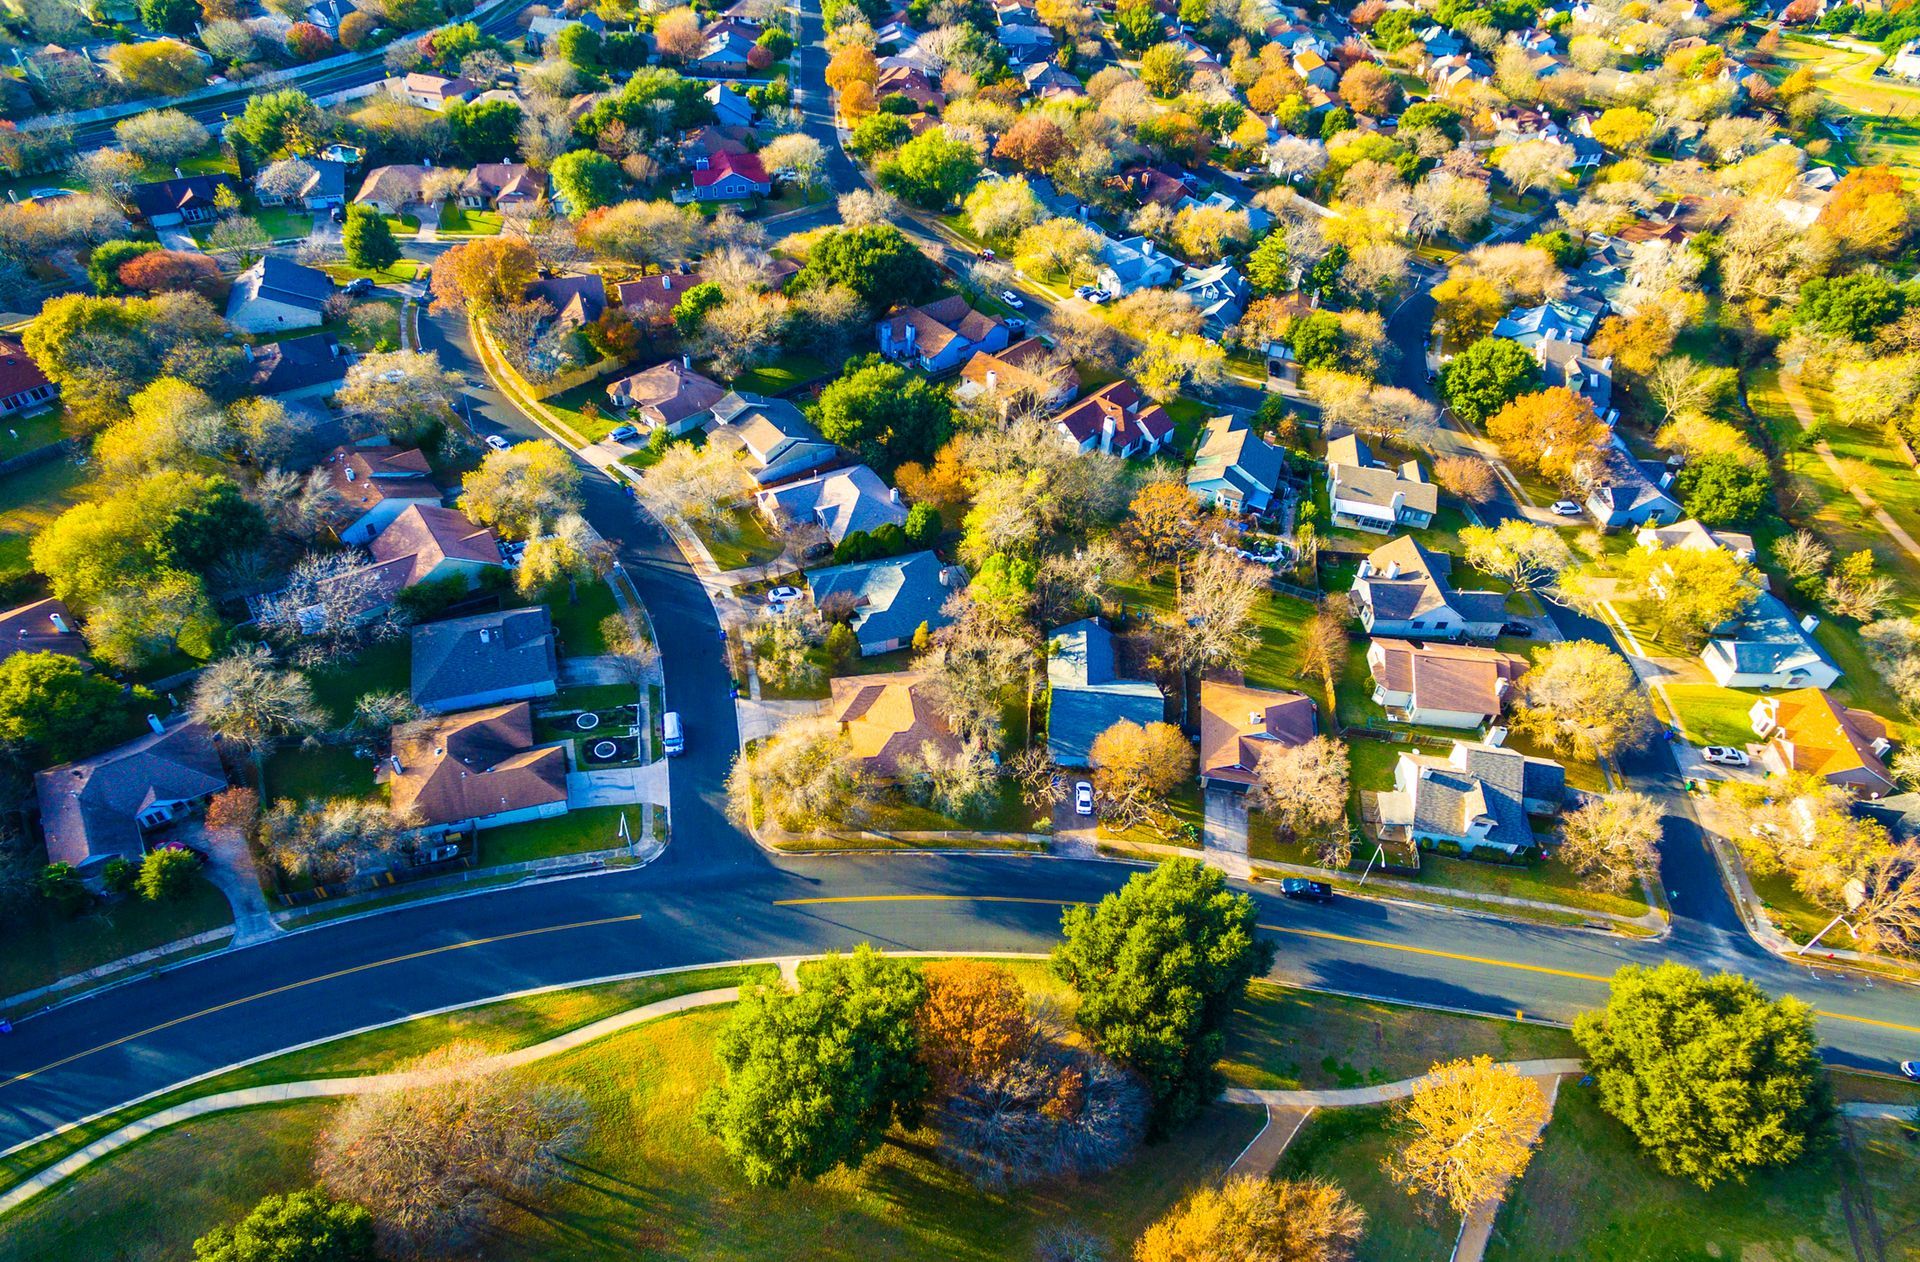 Drone view of neighborhood.